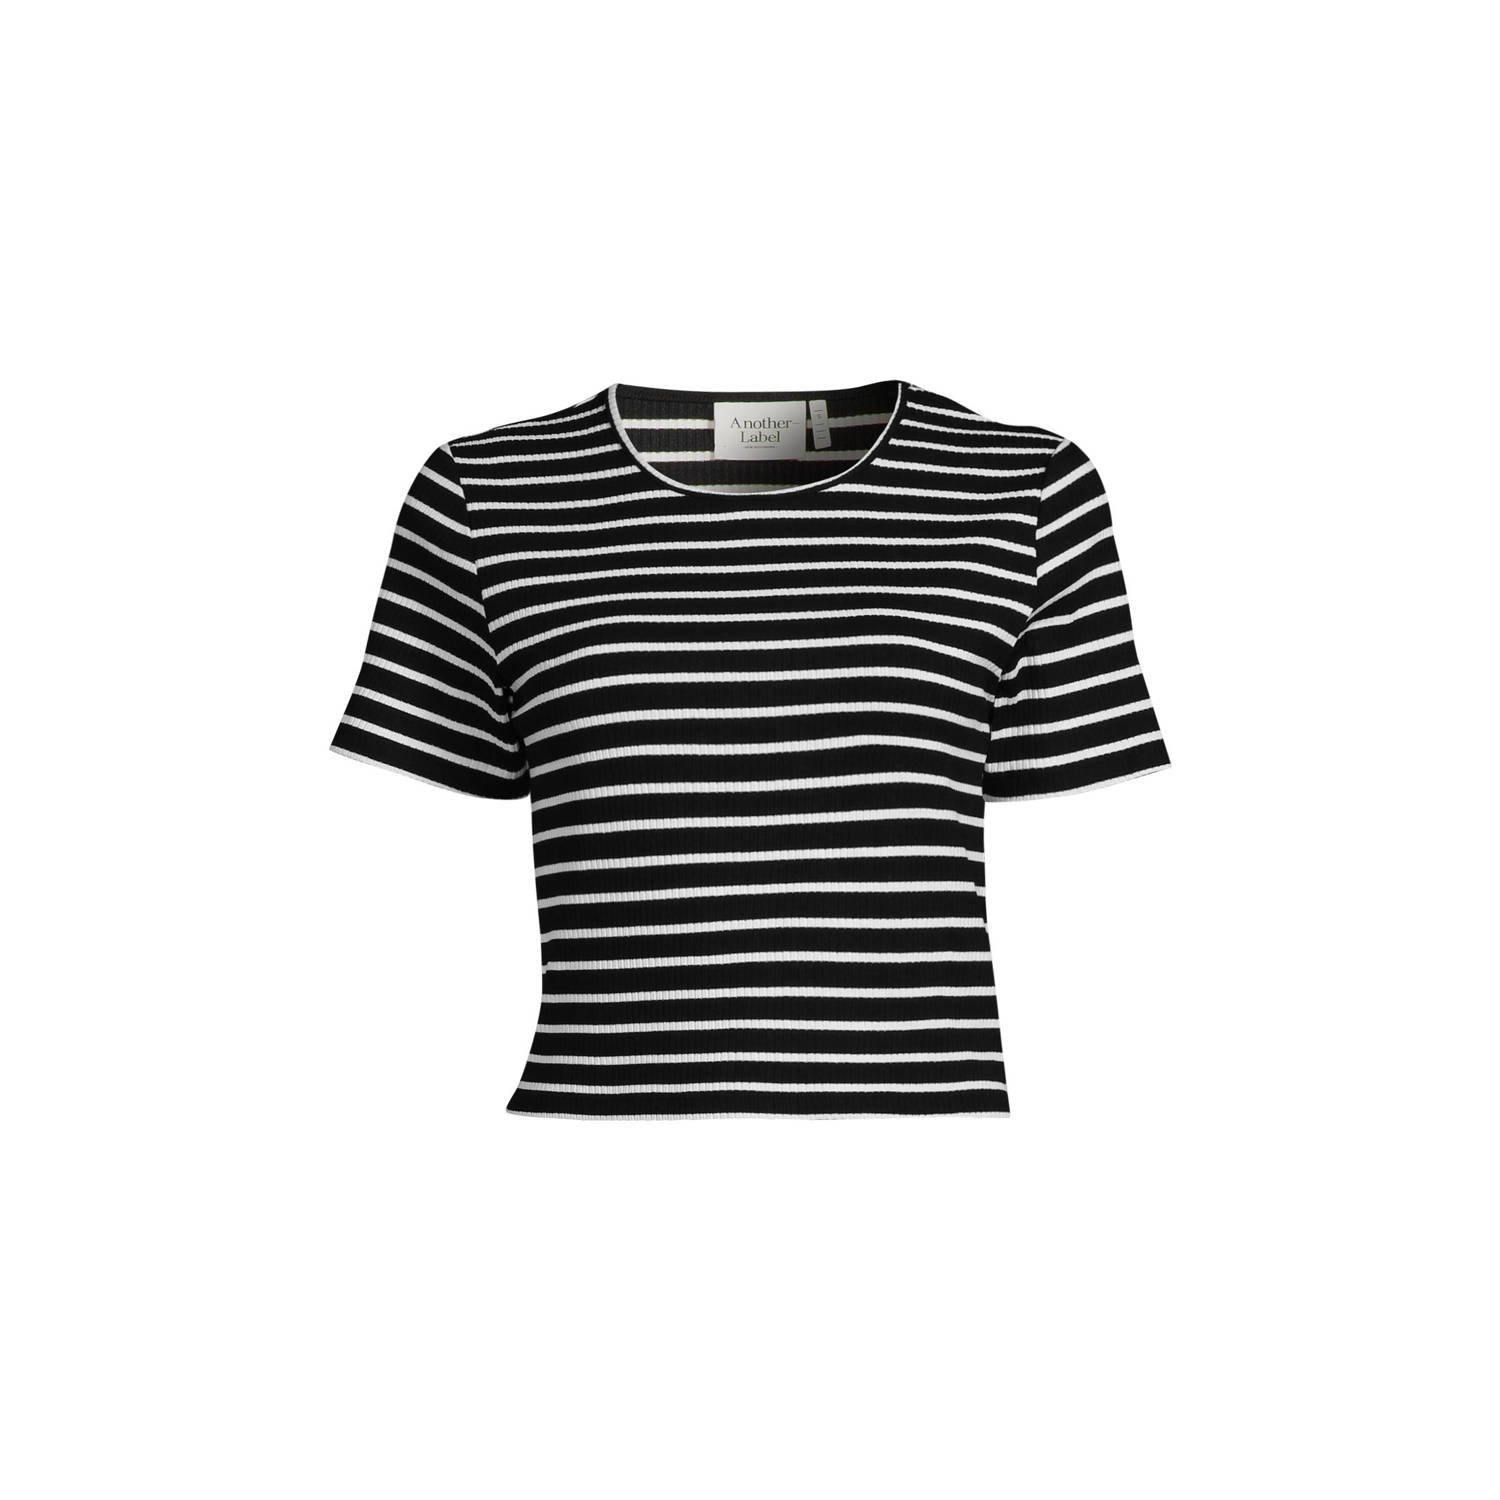 Another-Label gestreept T-shirt zwart wit